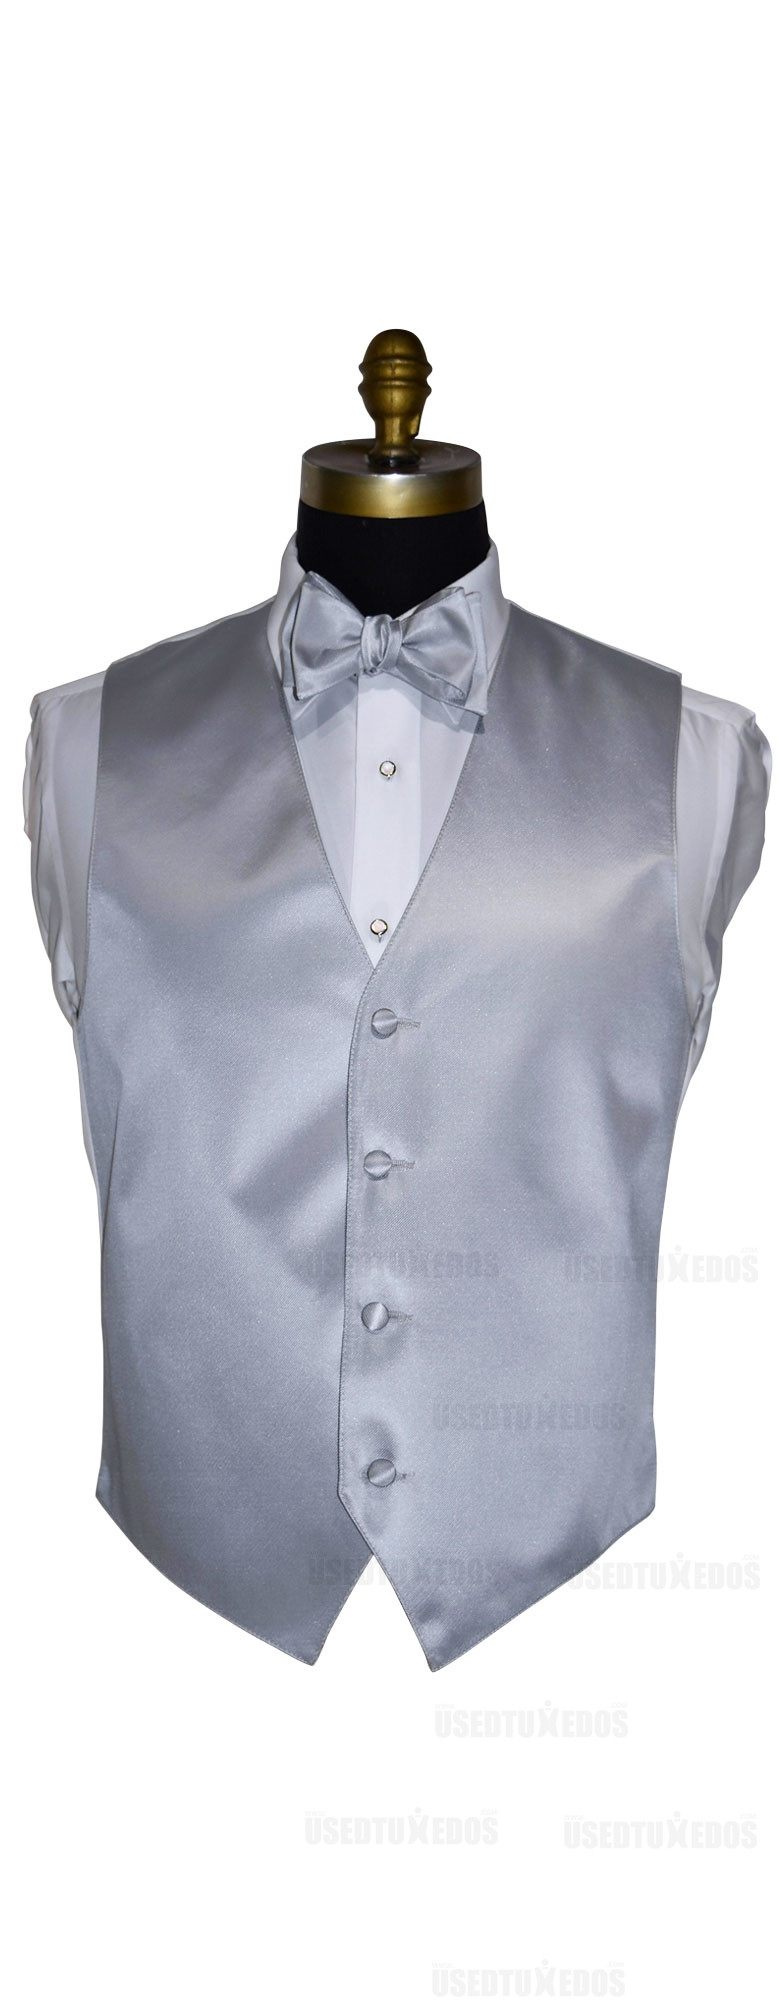 men's silver vest and silver tie-yourself bowtie